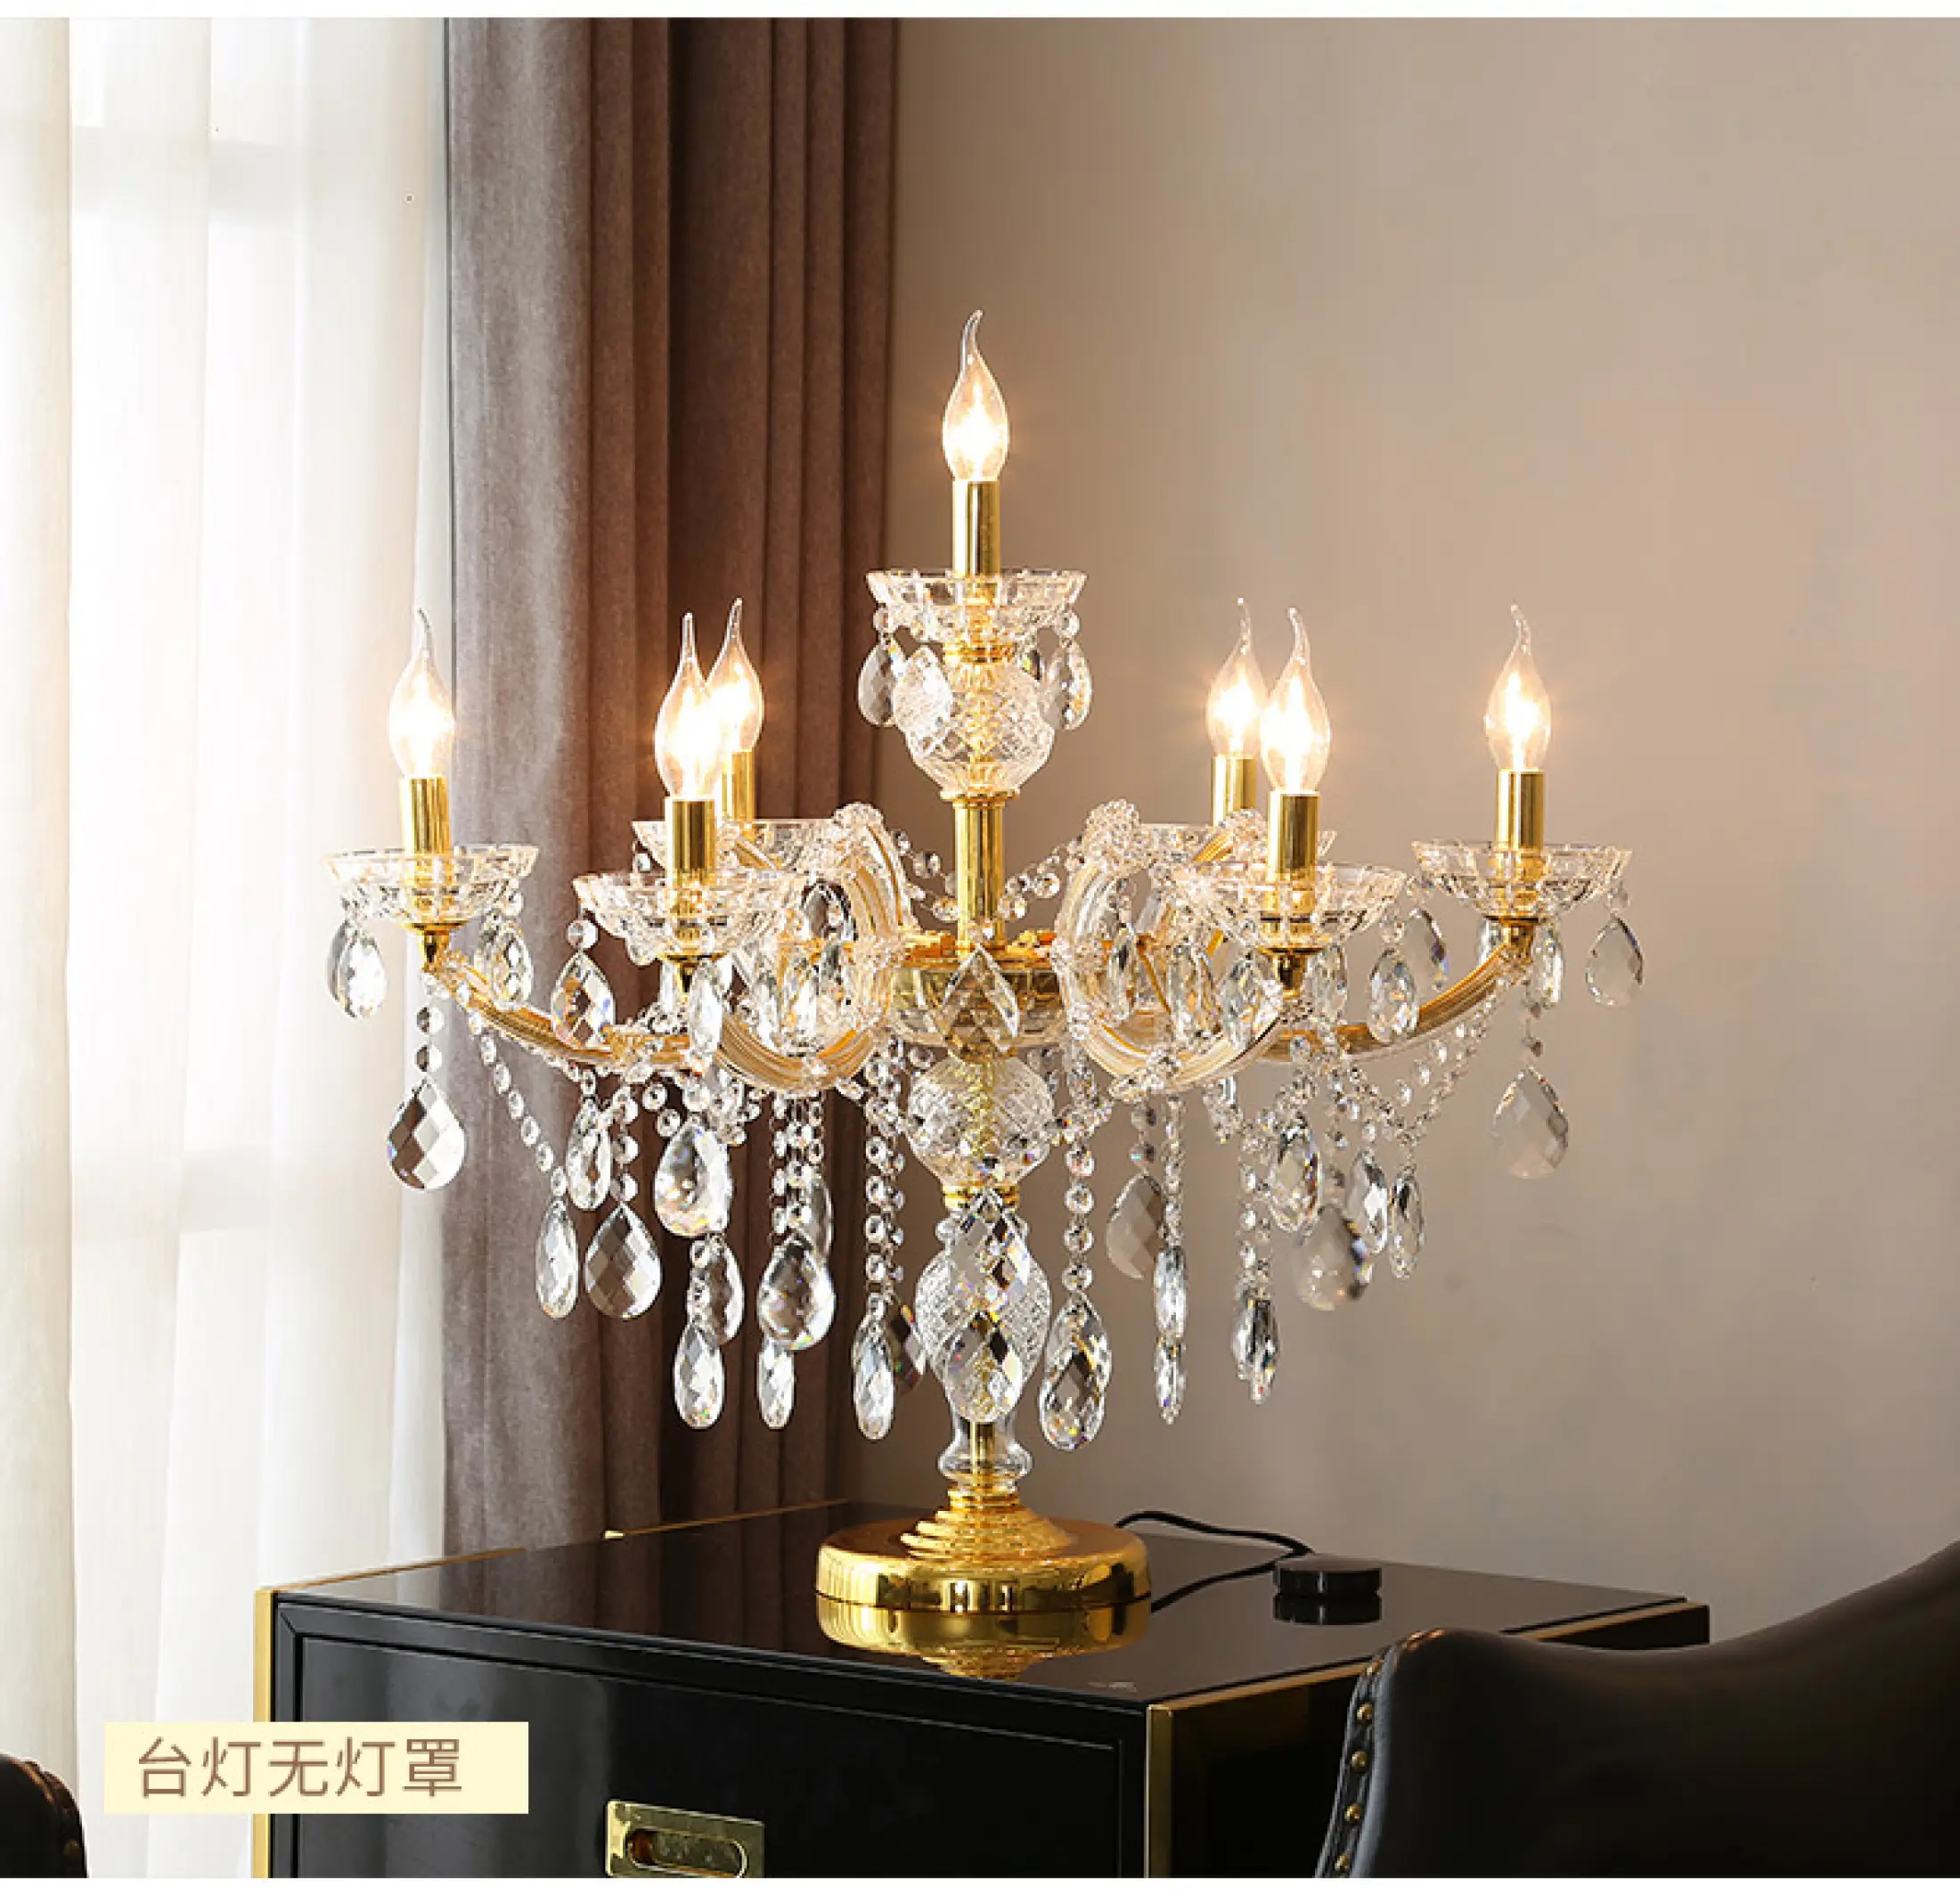 Bedside Decorative Lamp Lazada Singapore, Crystal Candle Chandelier Standard Size